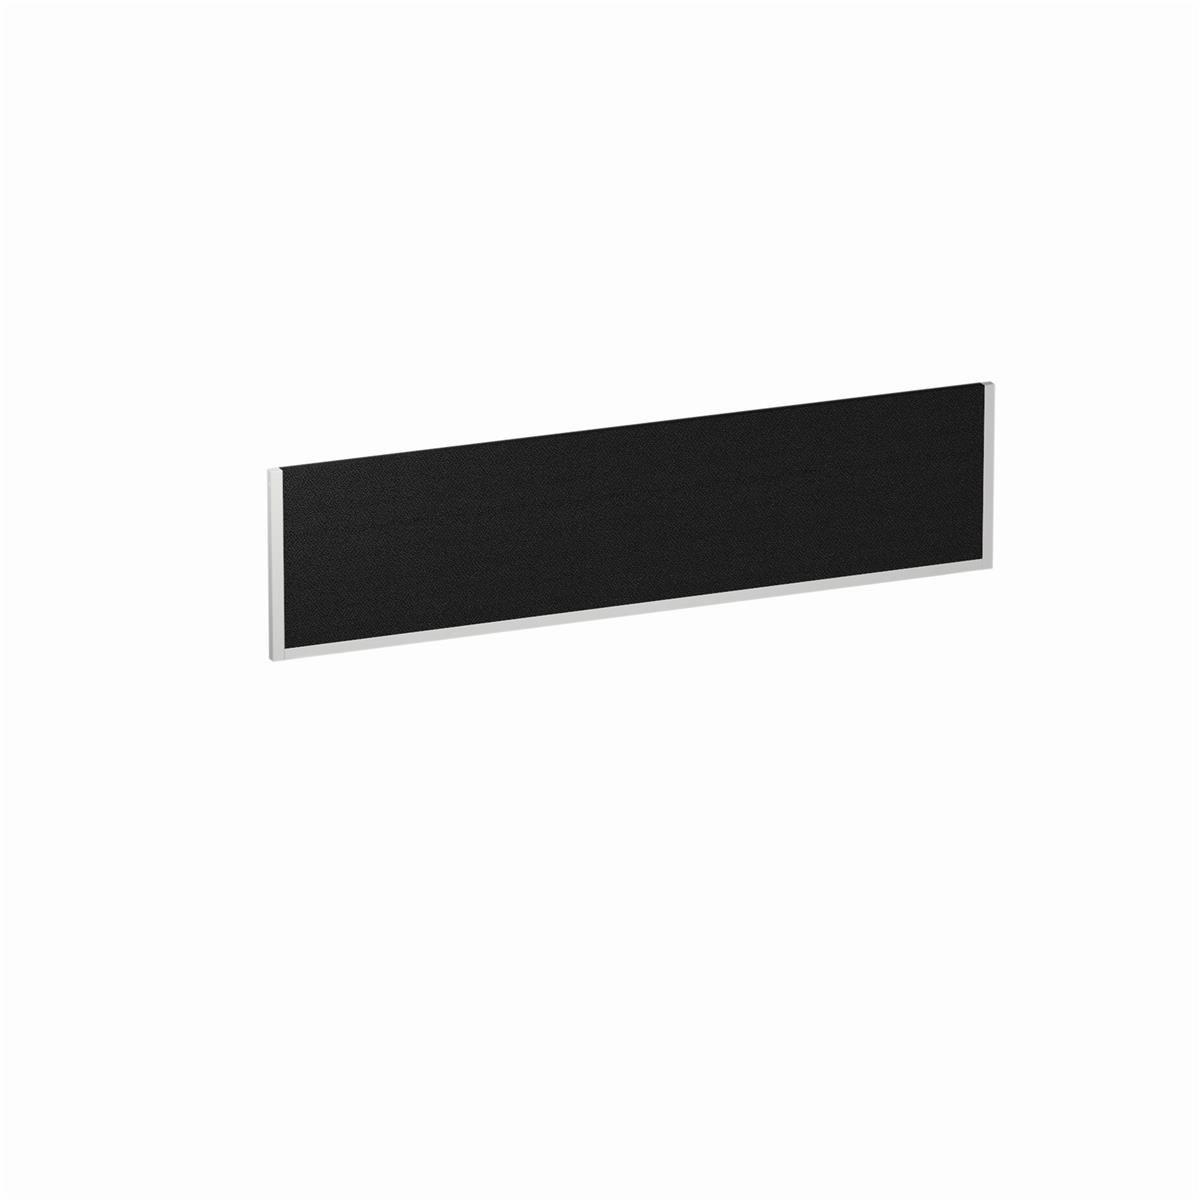 Rectangular Black and White Logo - Trexus 1600x400 Rectangular Bench Desk Screen Black White 1600x400mm